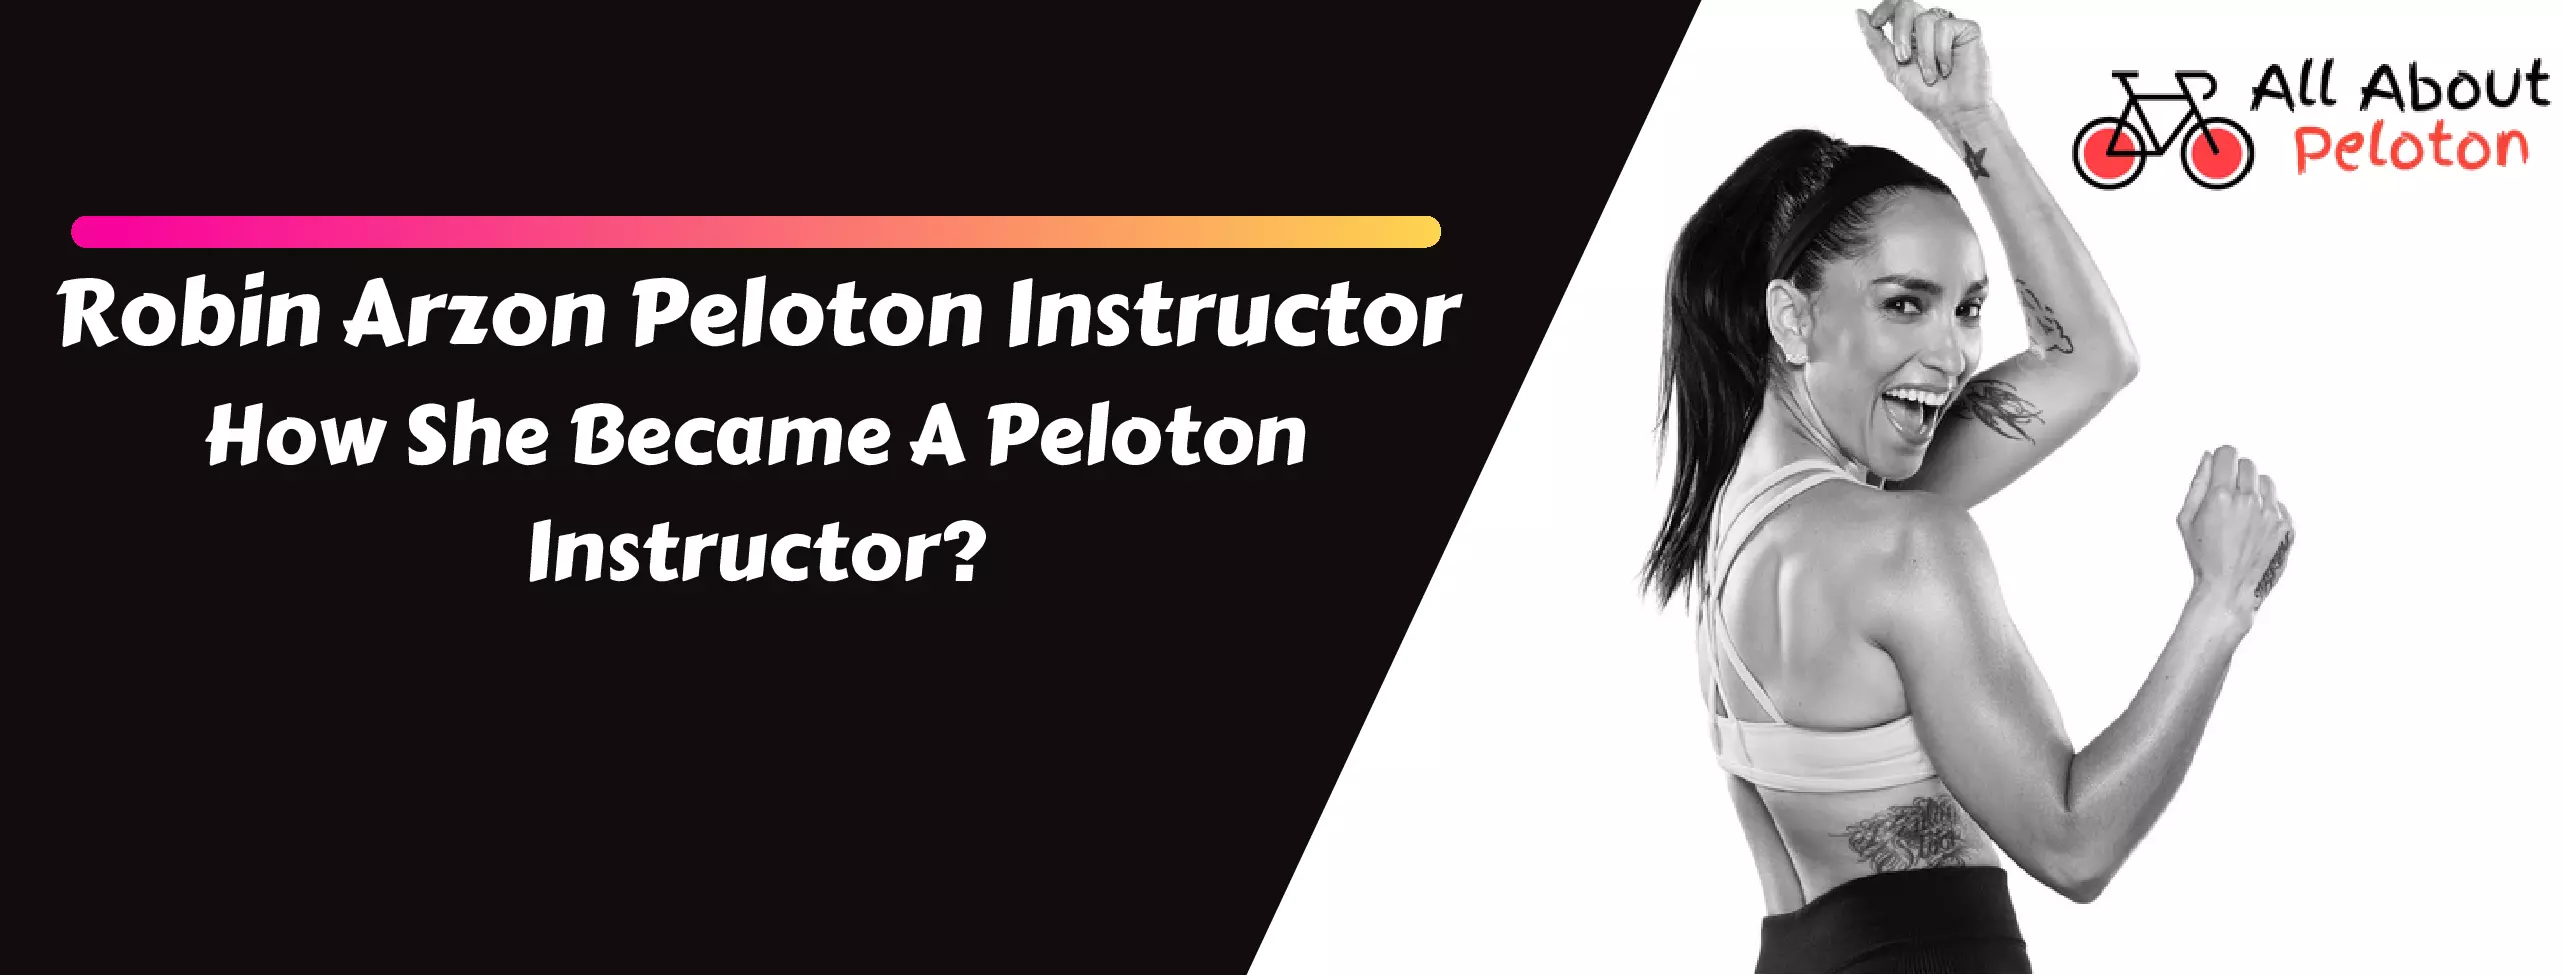 Robin Arzon Peloton Instructor How She Became A Peloton Instructor